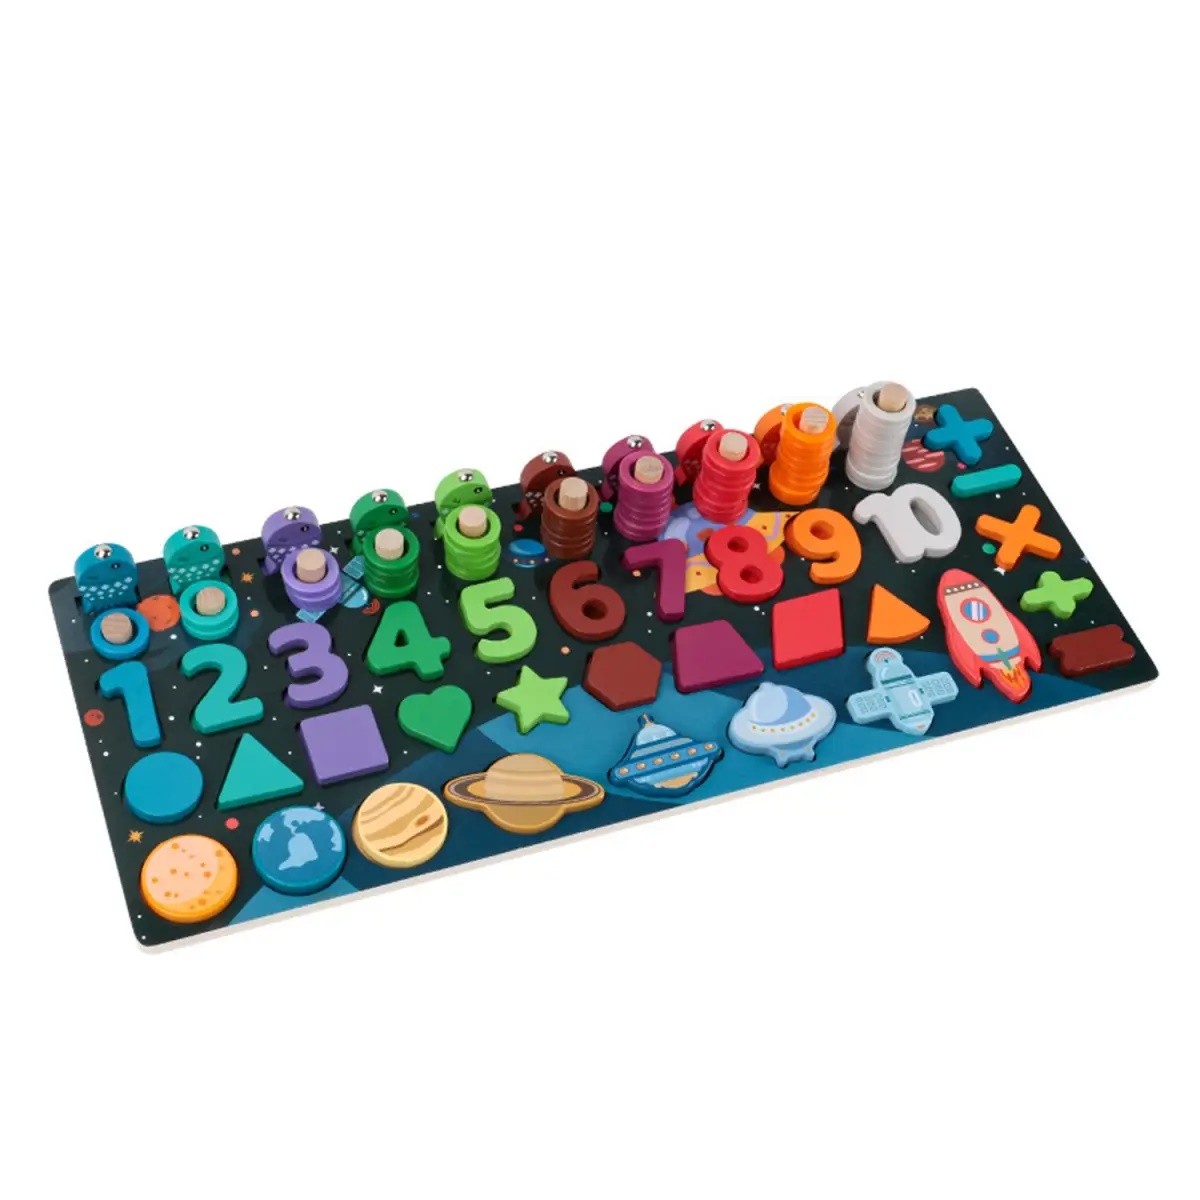 Eκπαιδευτικό Παιχνίδι Αριθμοί, Χρώματα, Σχήματα, HAKKO